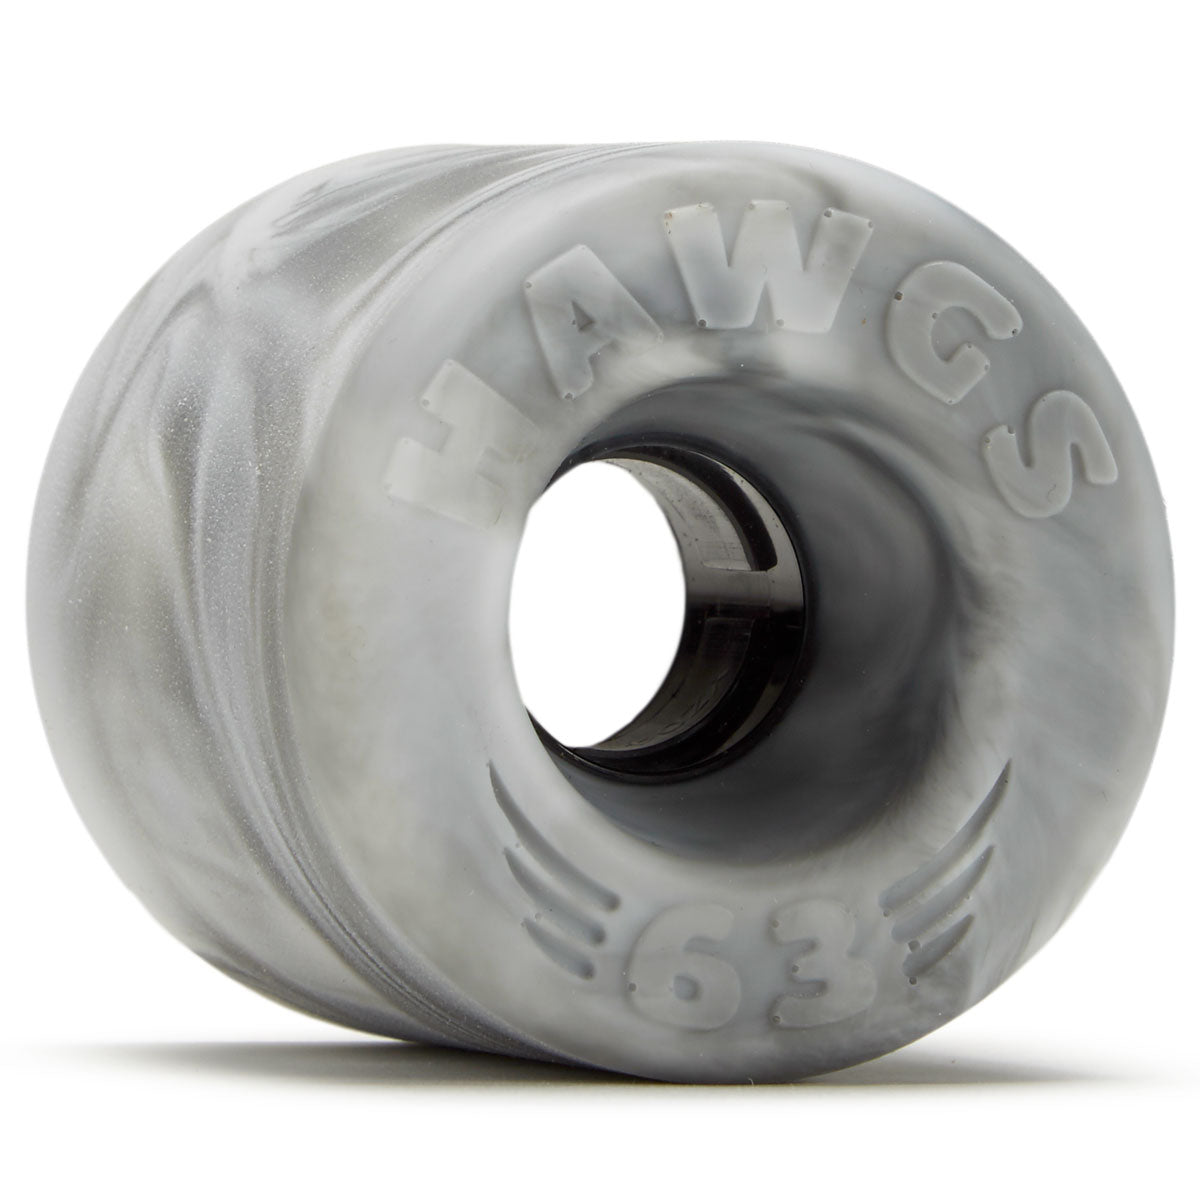 Hawgs Doozies 78a Stone Ground Longboard Wheels - Grey/White Swirl - 63mm image 1